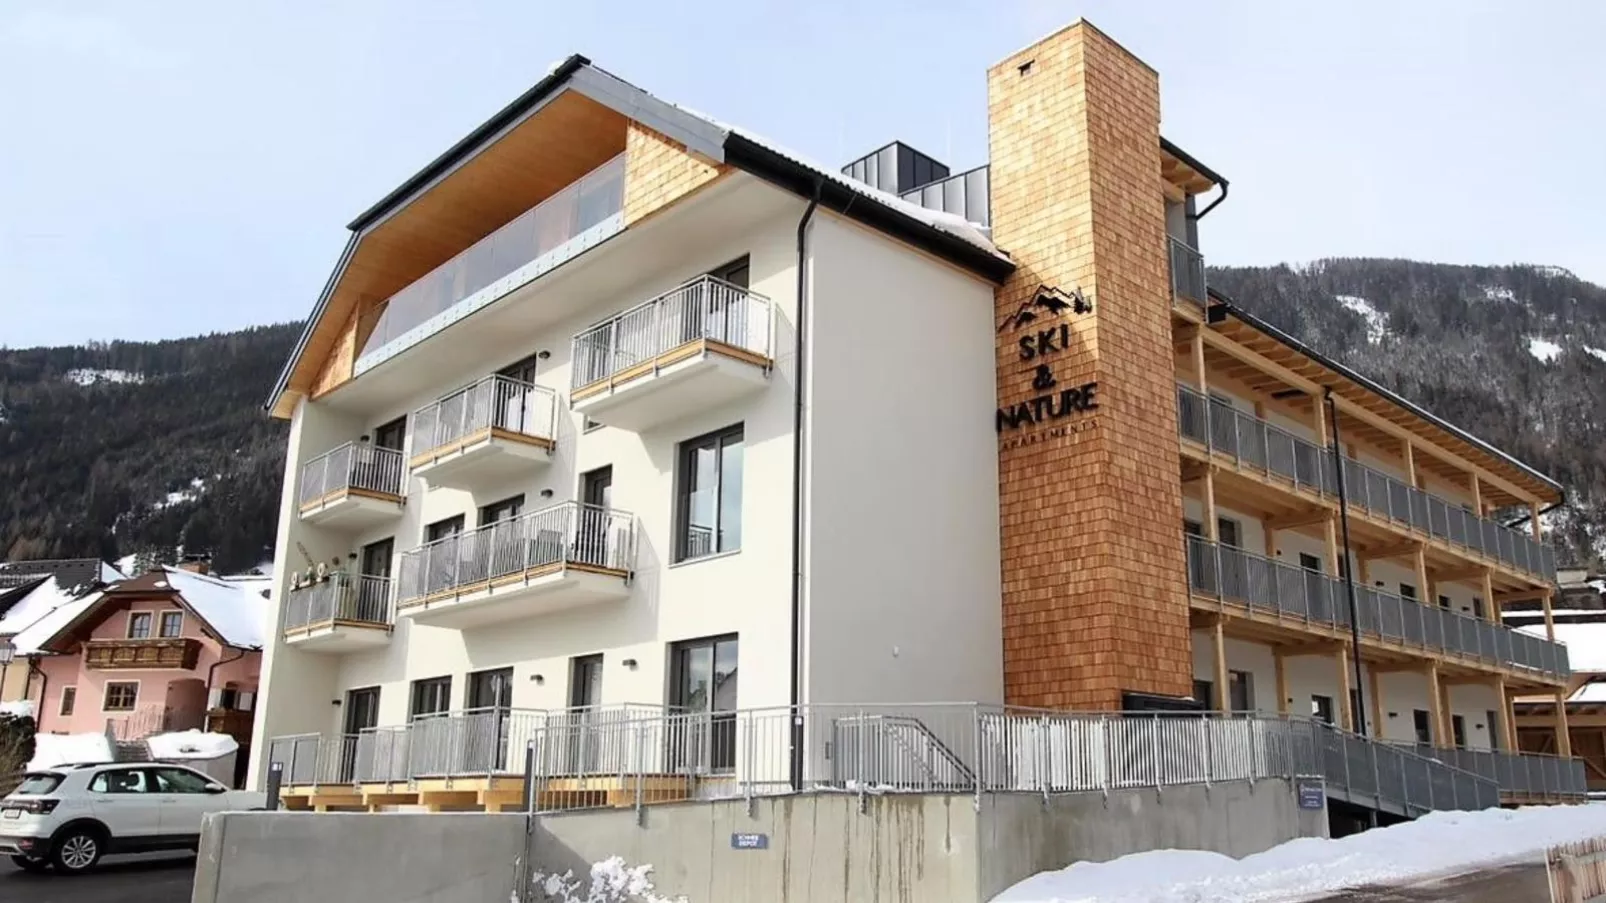 Ski Nature Apartment Lungau Top 15-Exterieur winter